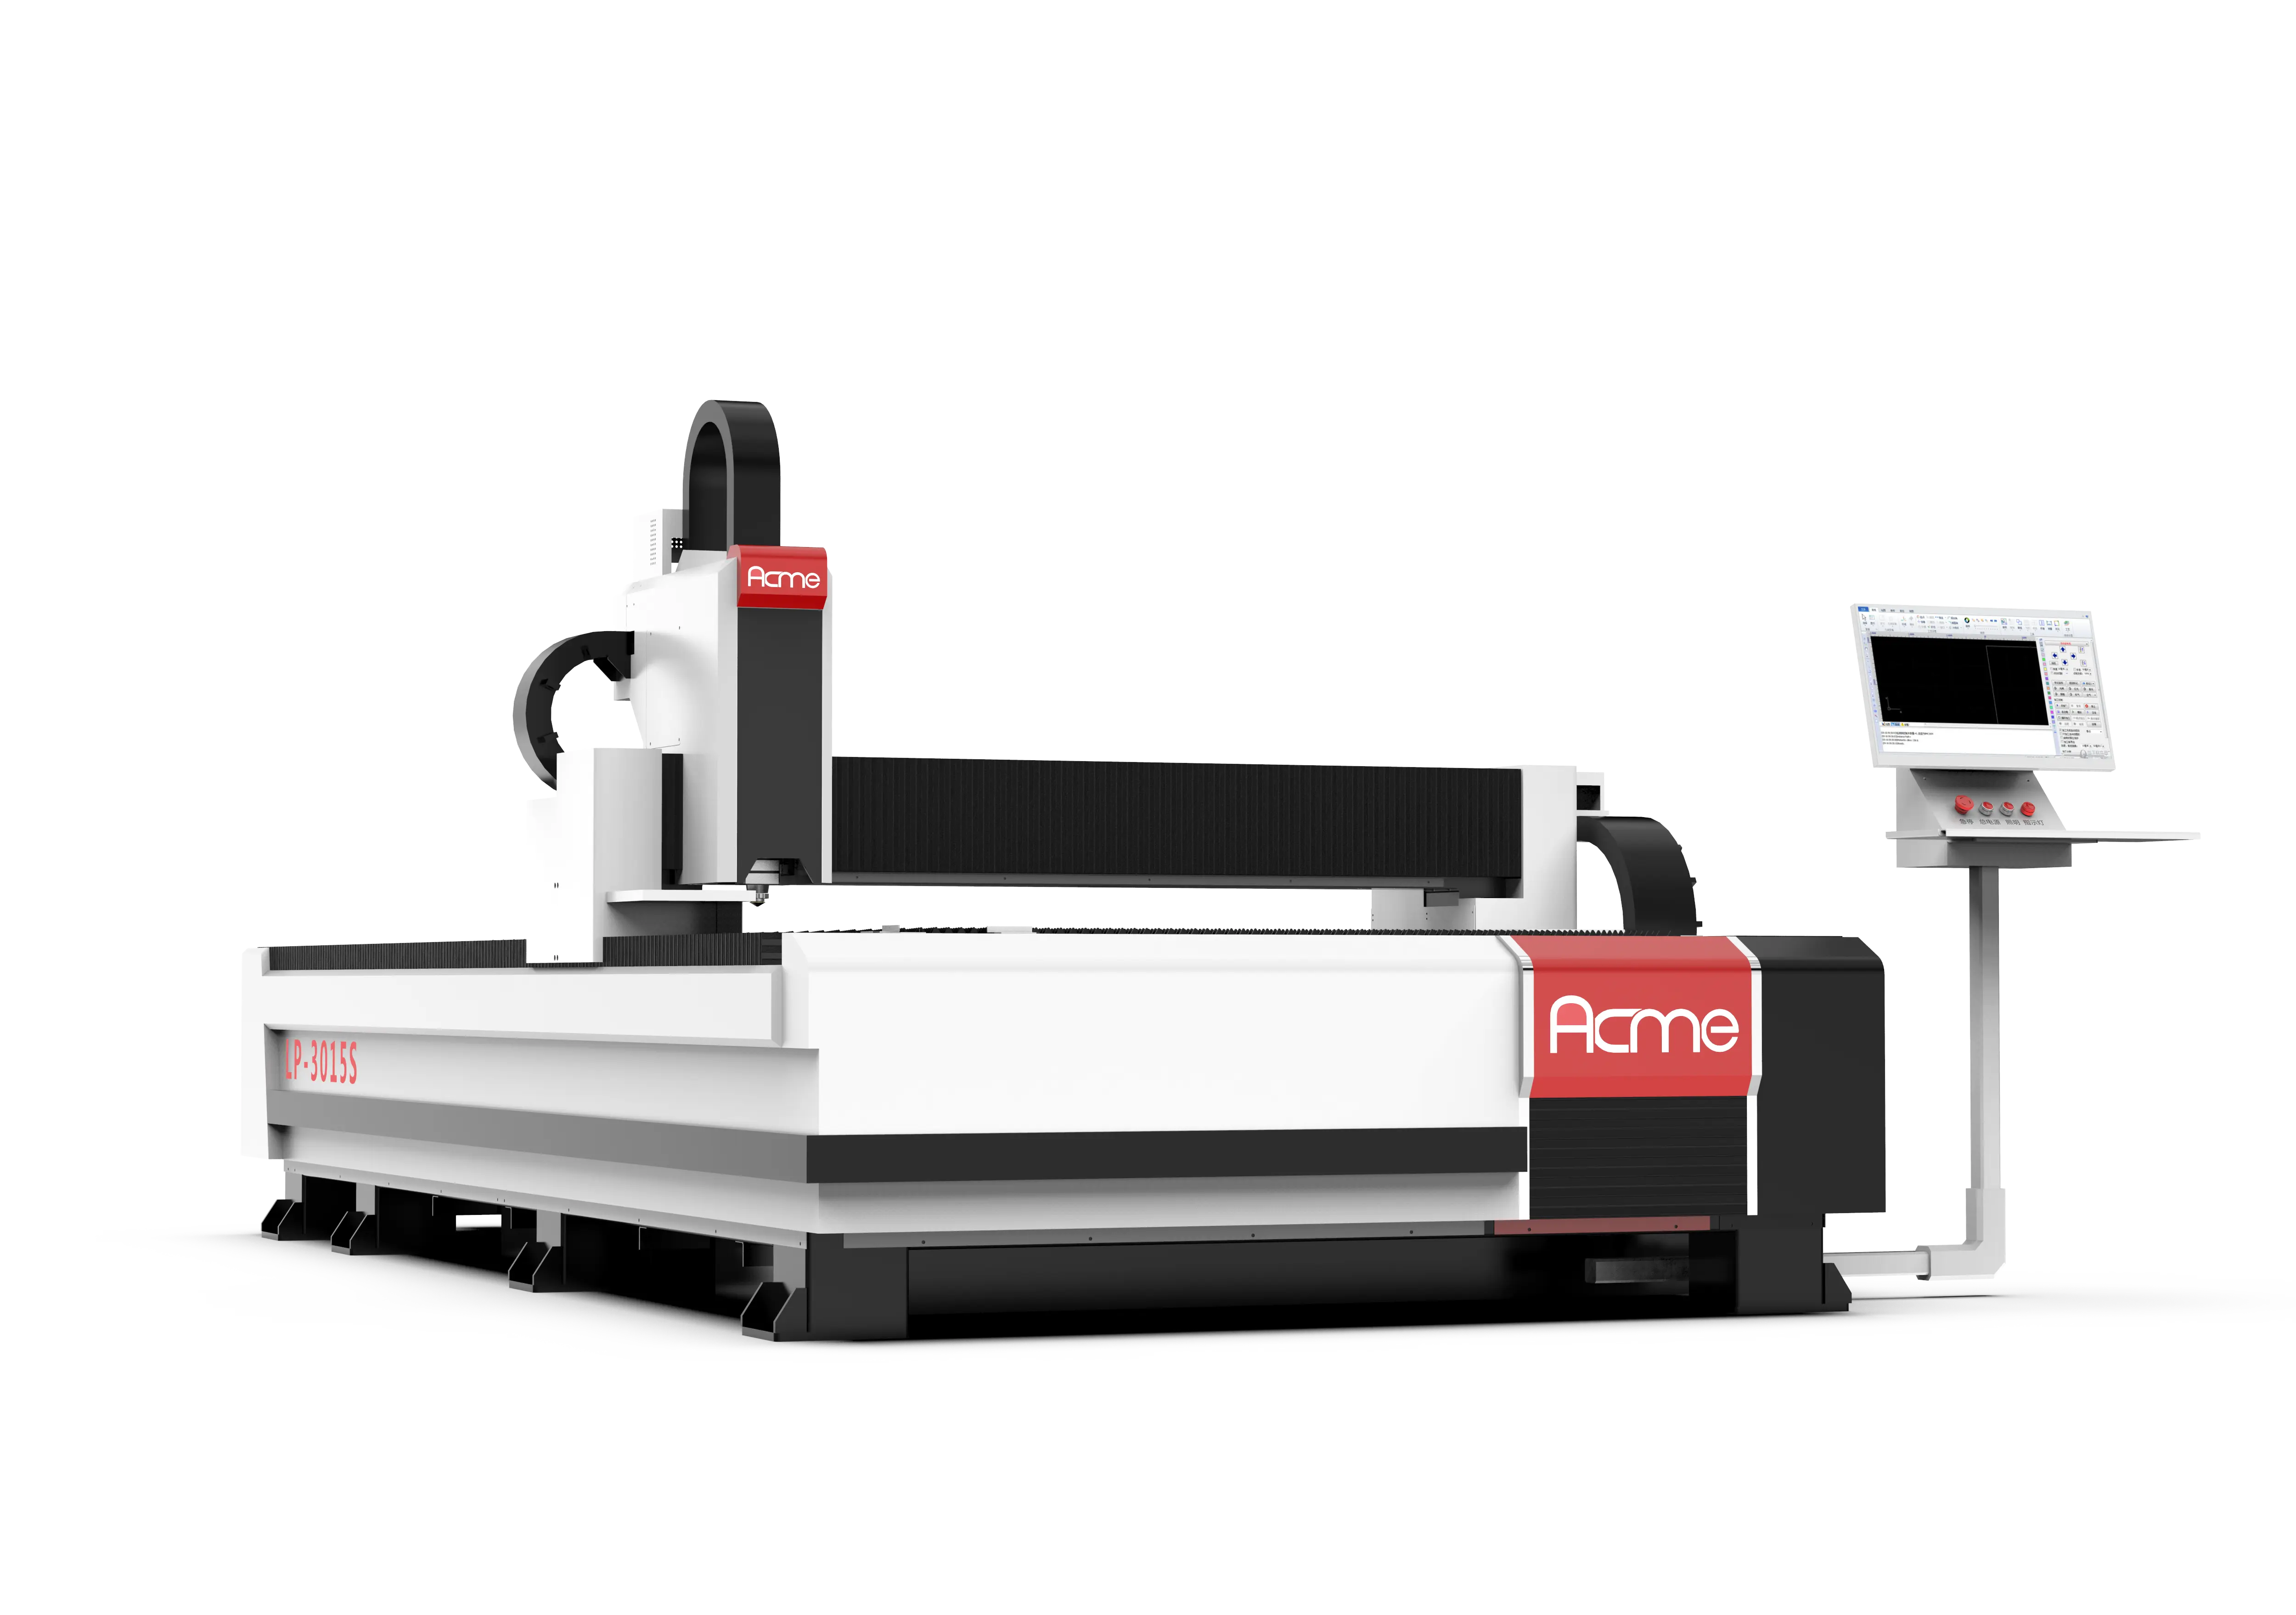 Acme laser Cutting Machine LP - 3015s / / Sheet Cutting machine / / Factory Direct Supply